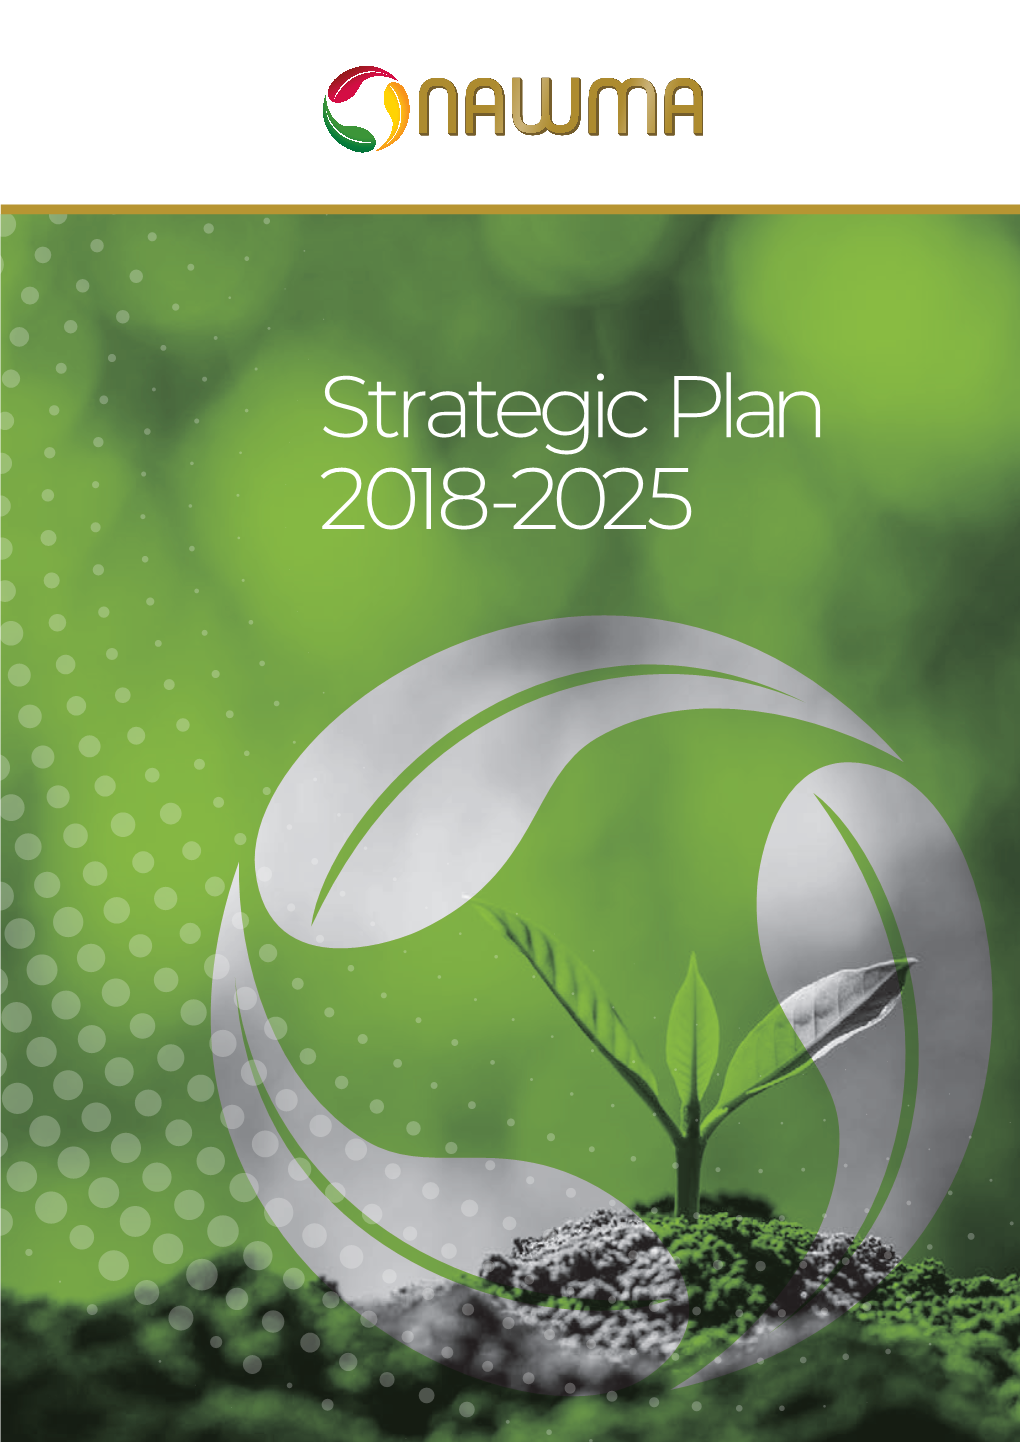 NAWMA Strategic Plan 2018-2025